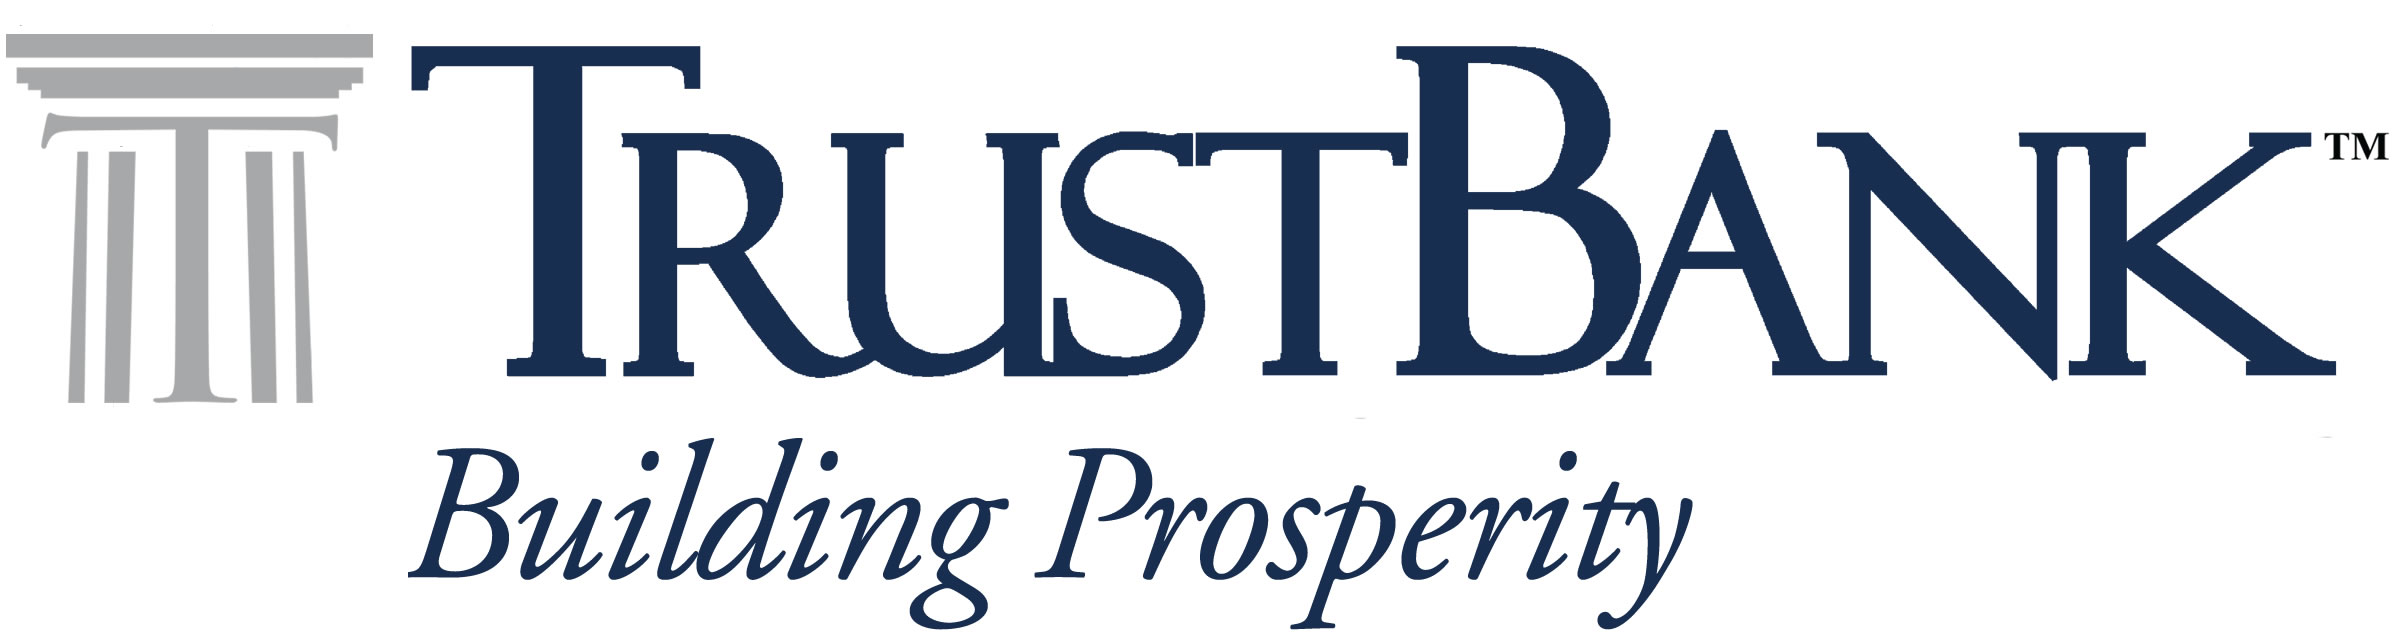 TrustBank Logo.jpg